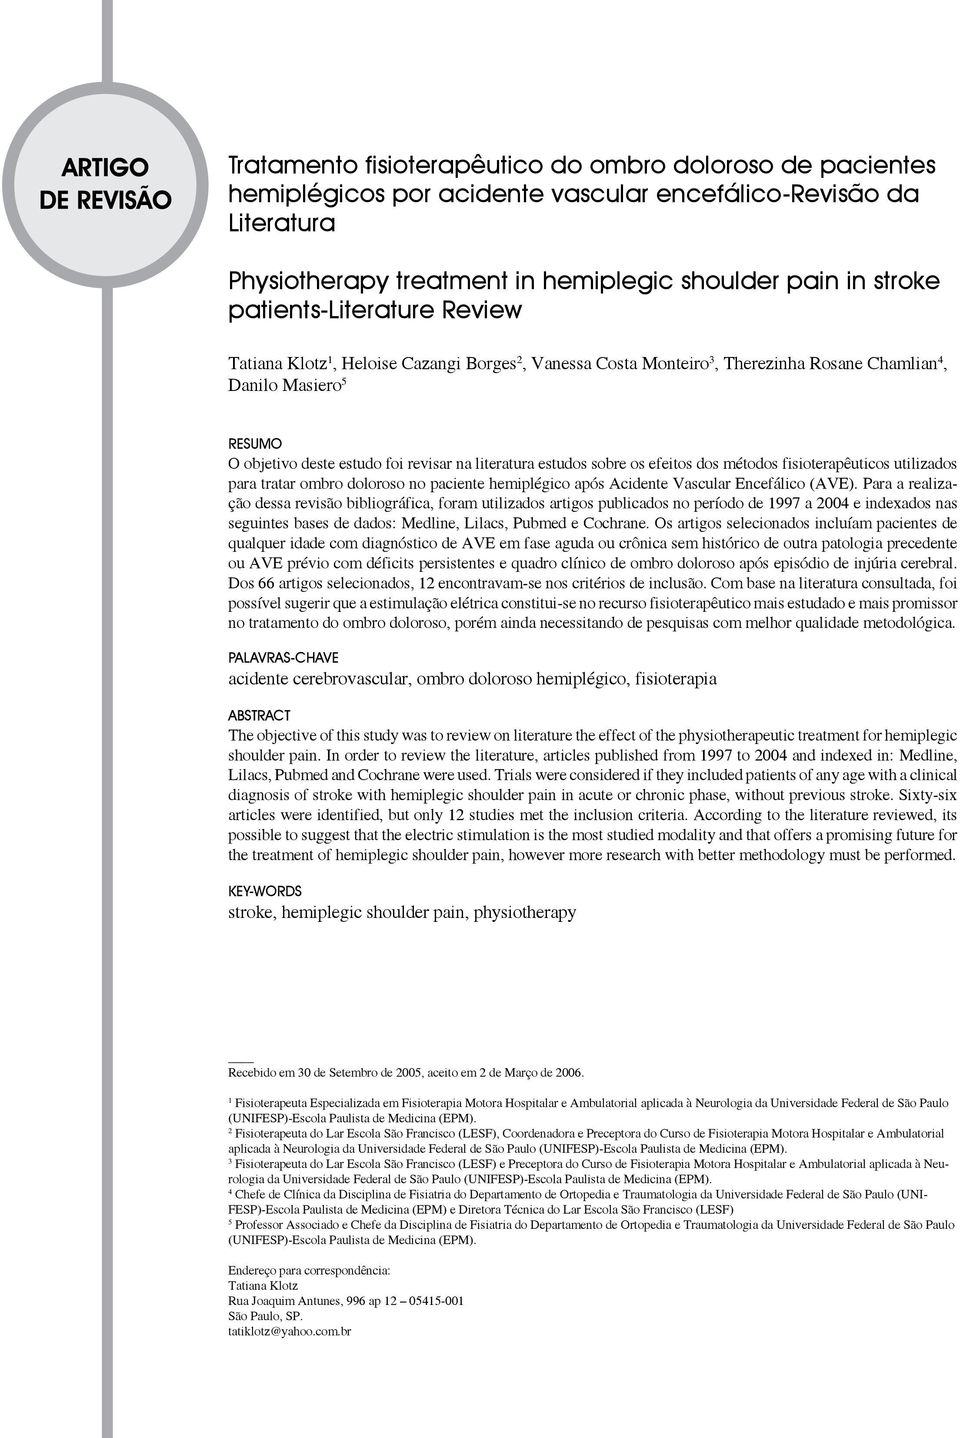 estudos sobre os efeitos dos métodos fisioterapêuticos utilizados para tratar ombro doloroso no paciente hemiplégico após Acidente Vascular Encefálico (AVE).